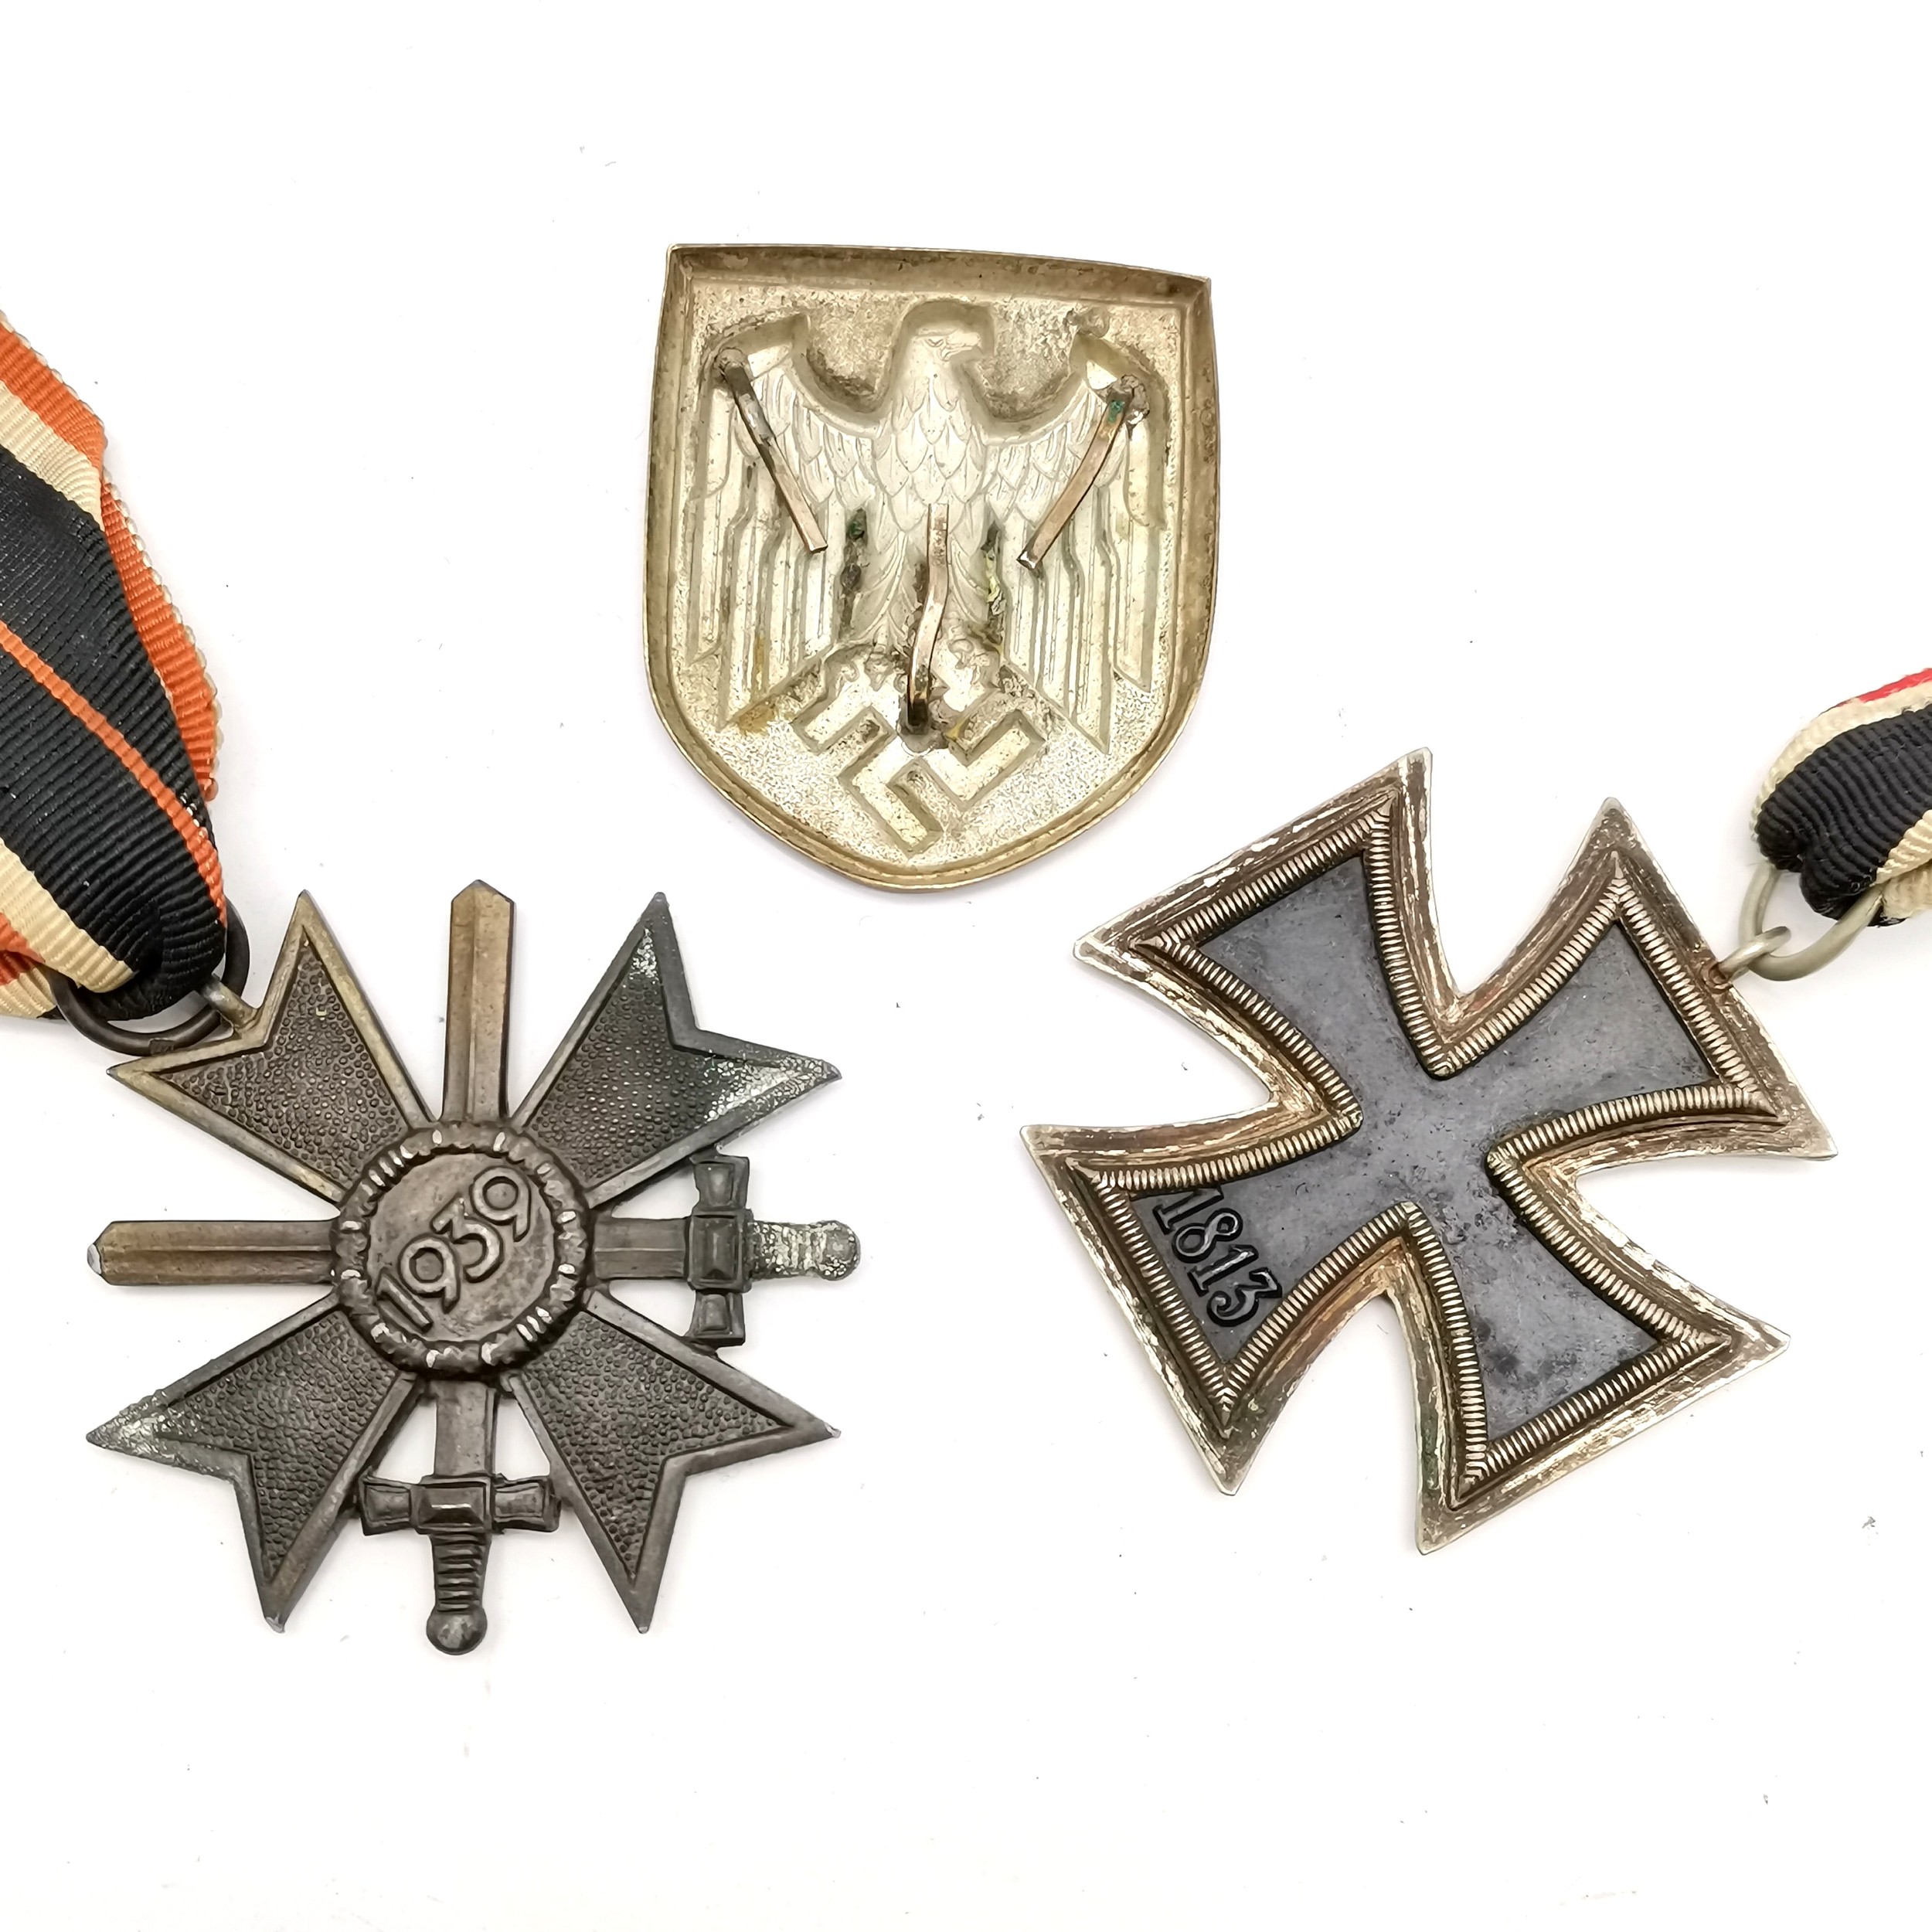 WW2 genuine second class iron cross medal on original ribbon, German war medal, tropical pith helmet - Image 3 of 4